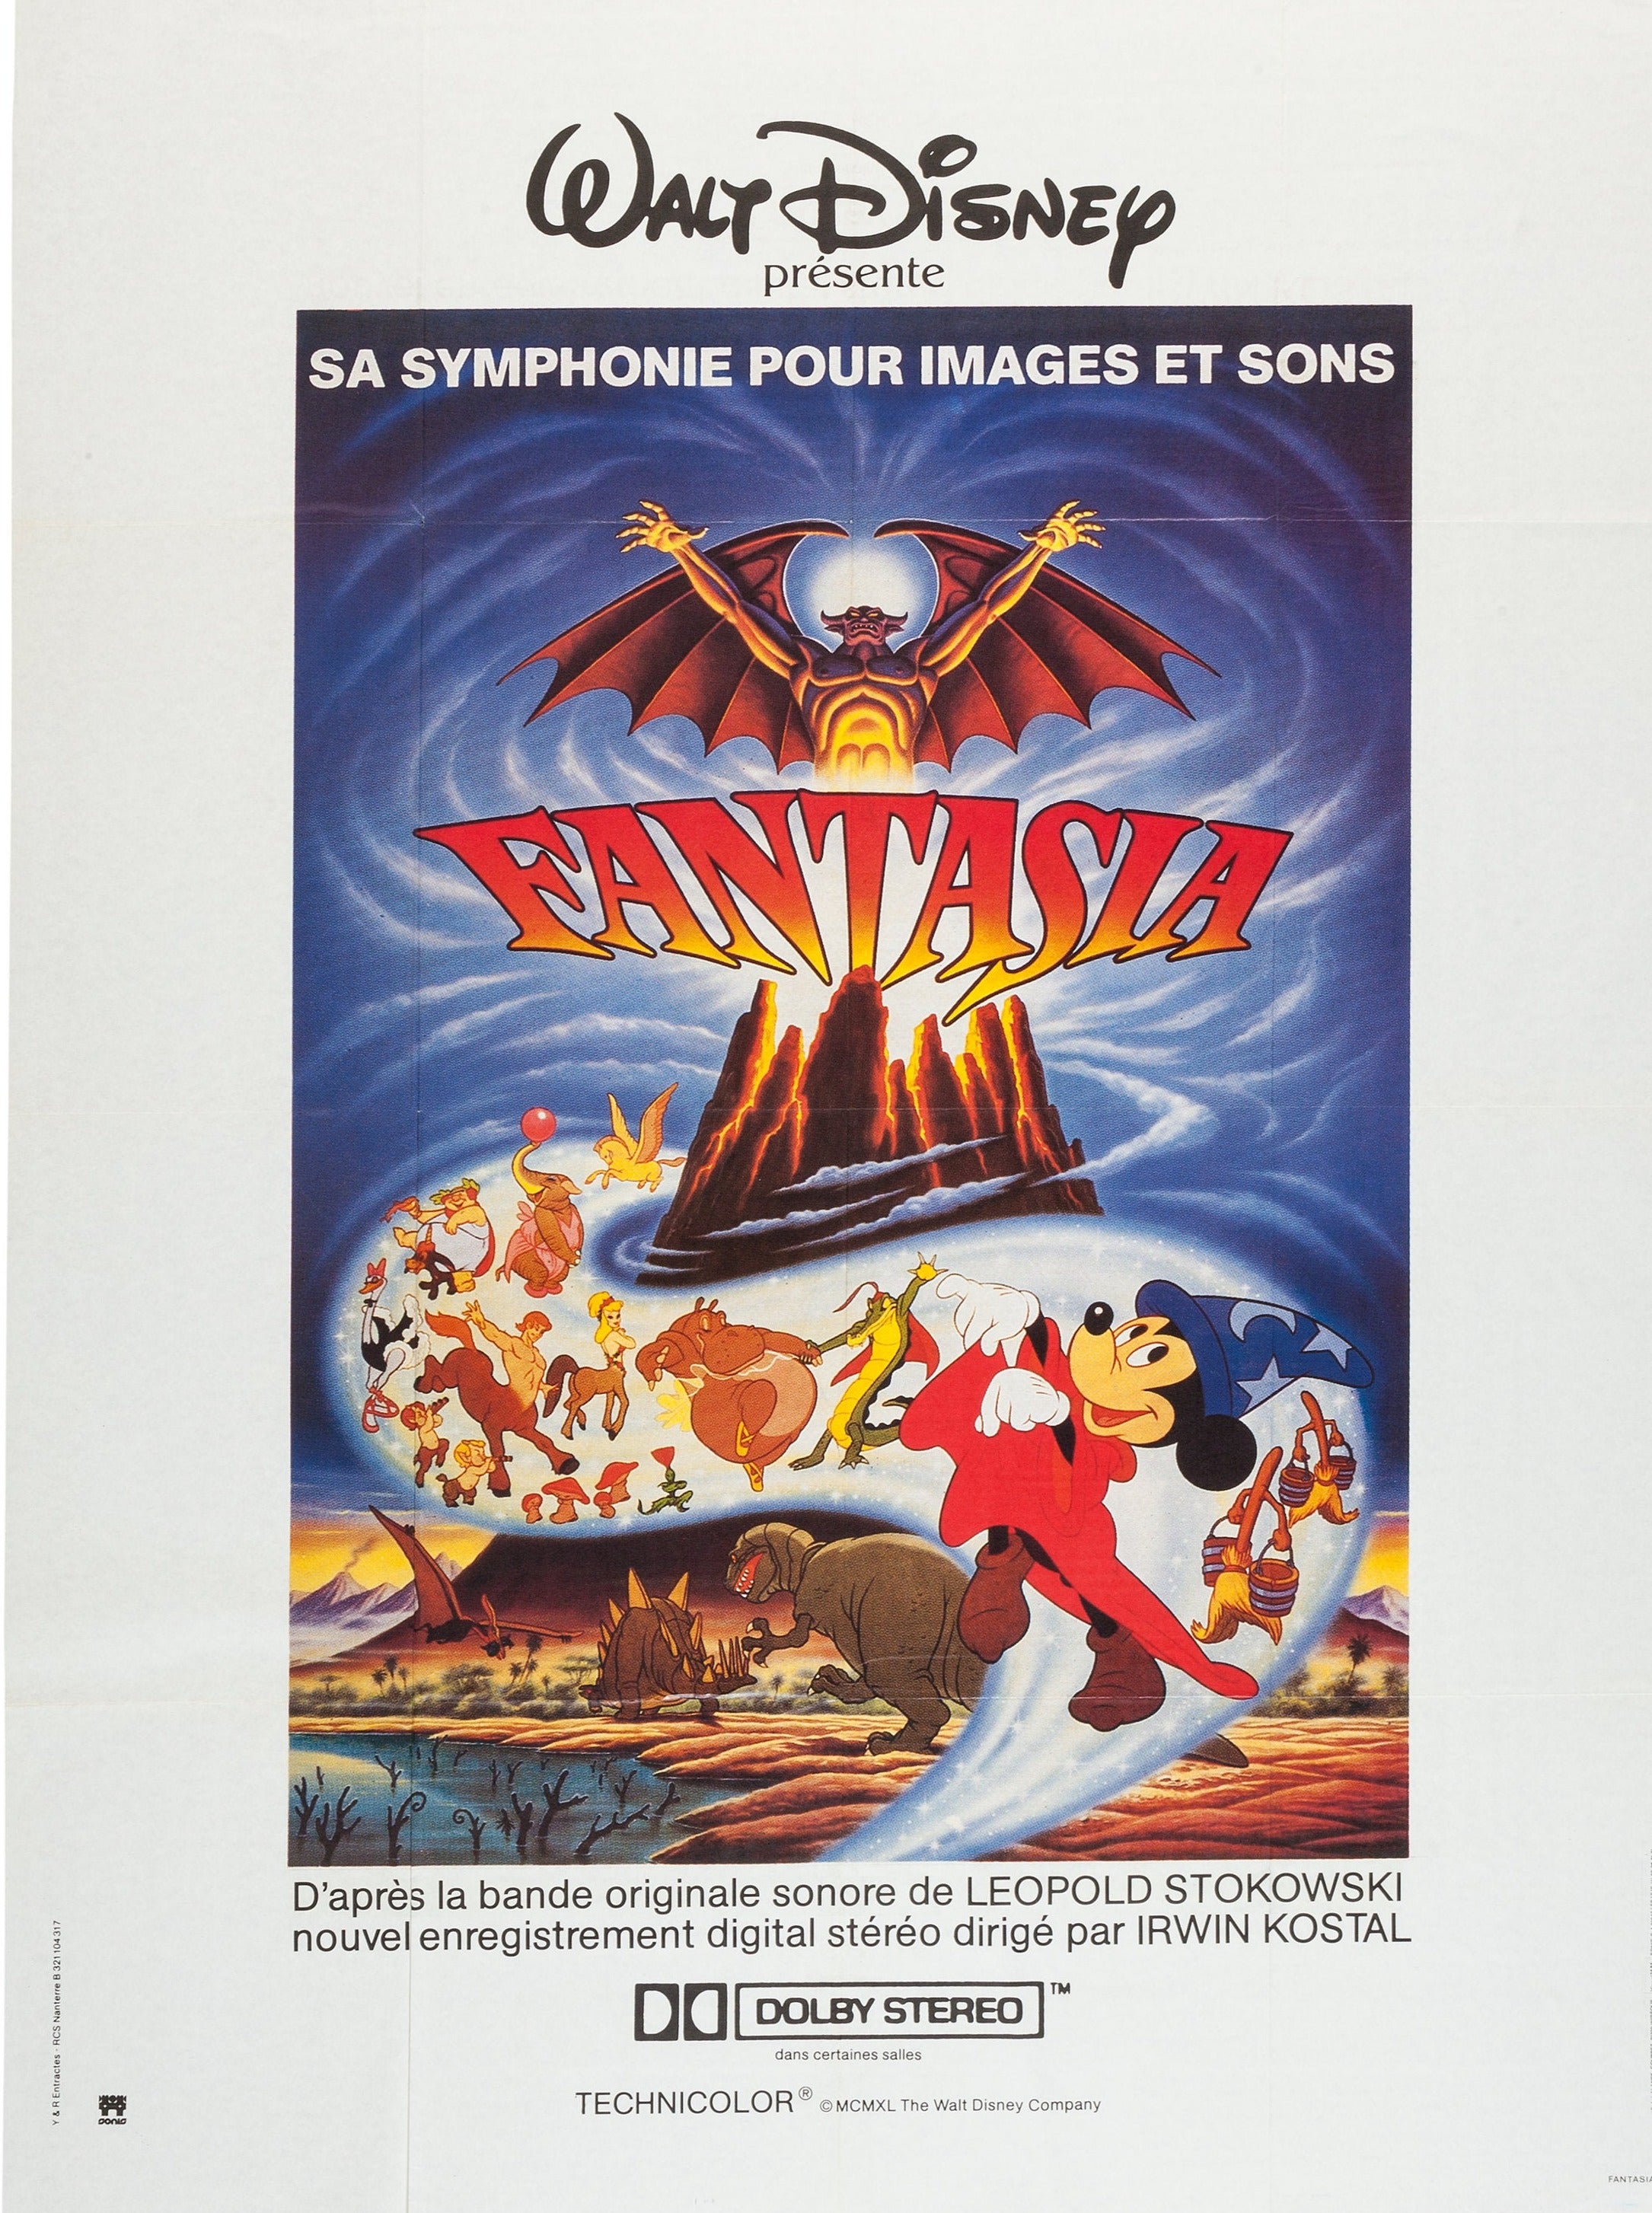 Fantasia Original French poster circa 1980s